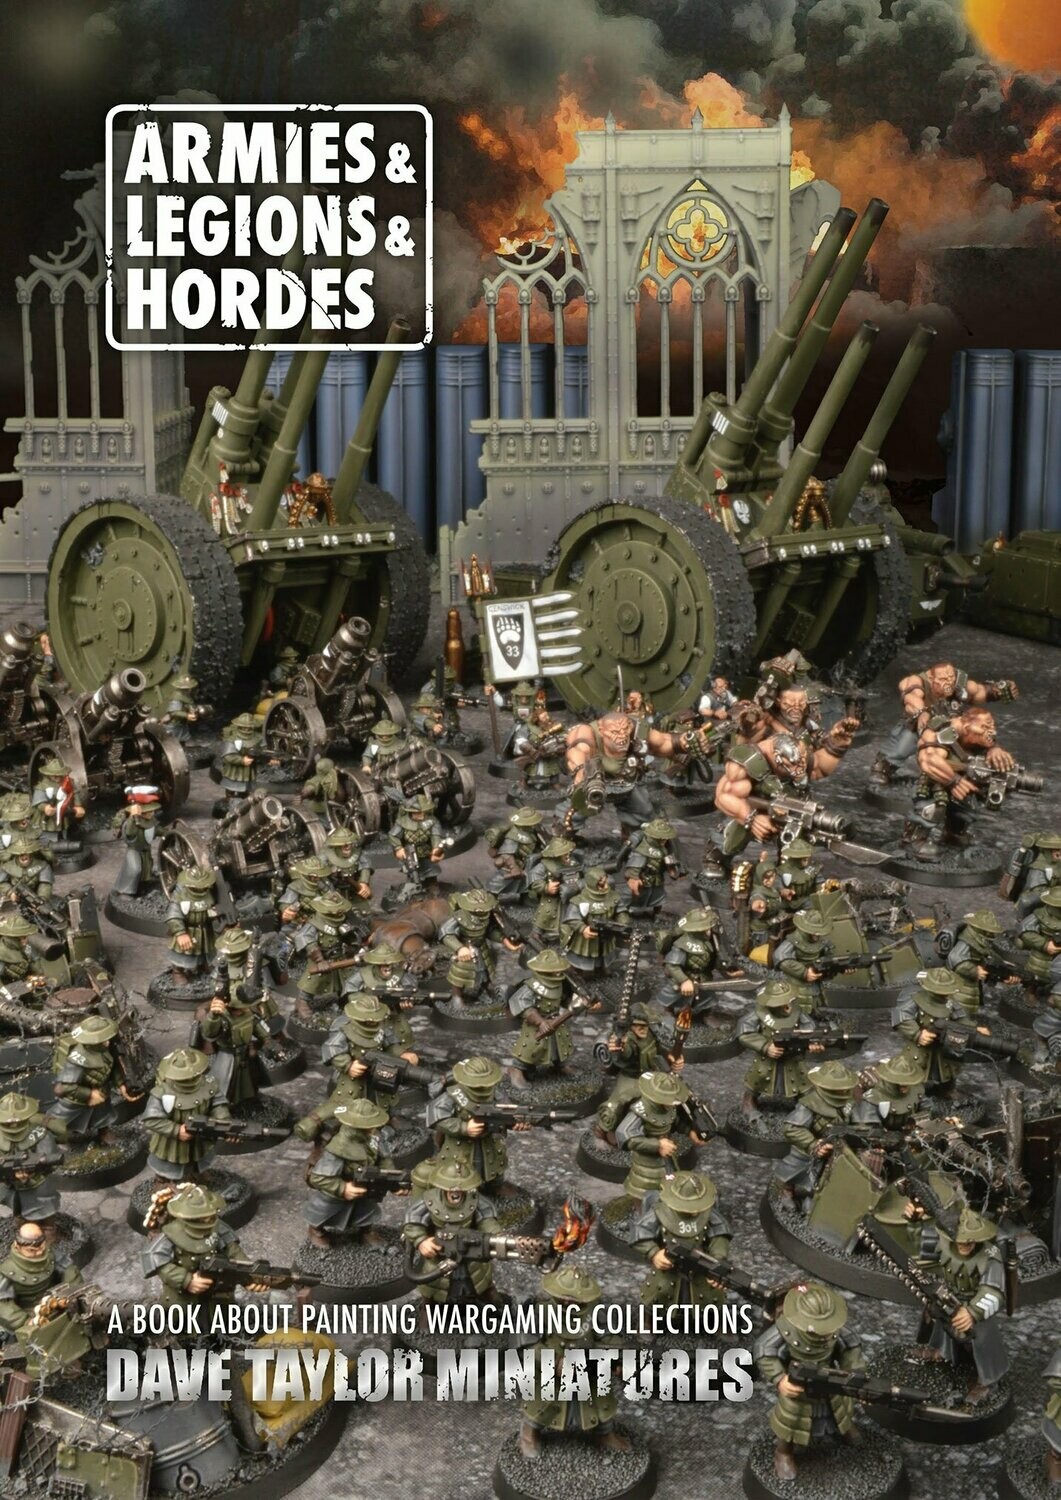 Armies & Legions & Hordes - Buch - Dave Taylor Miniatures